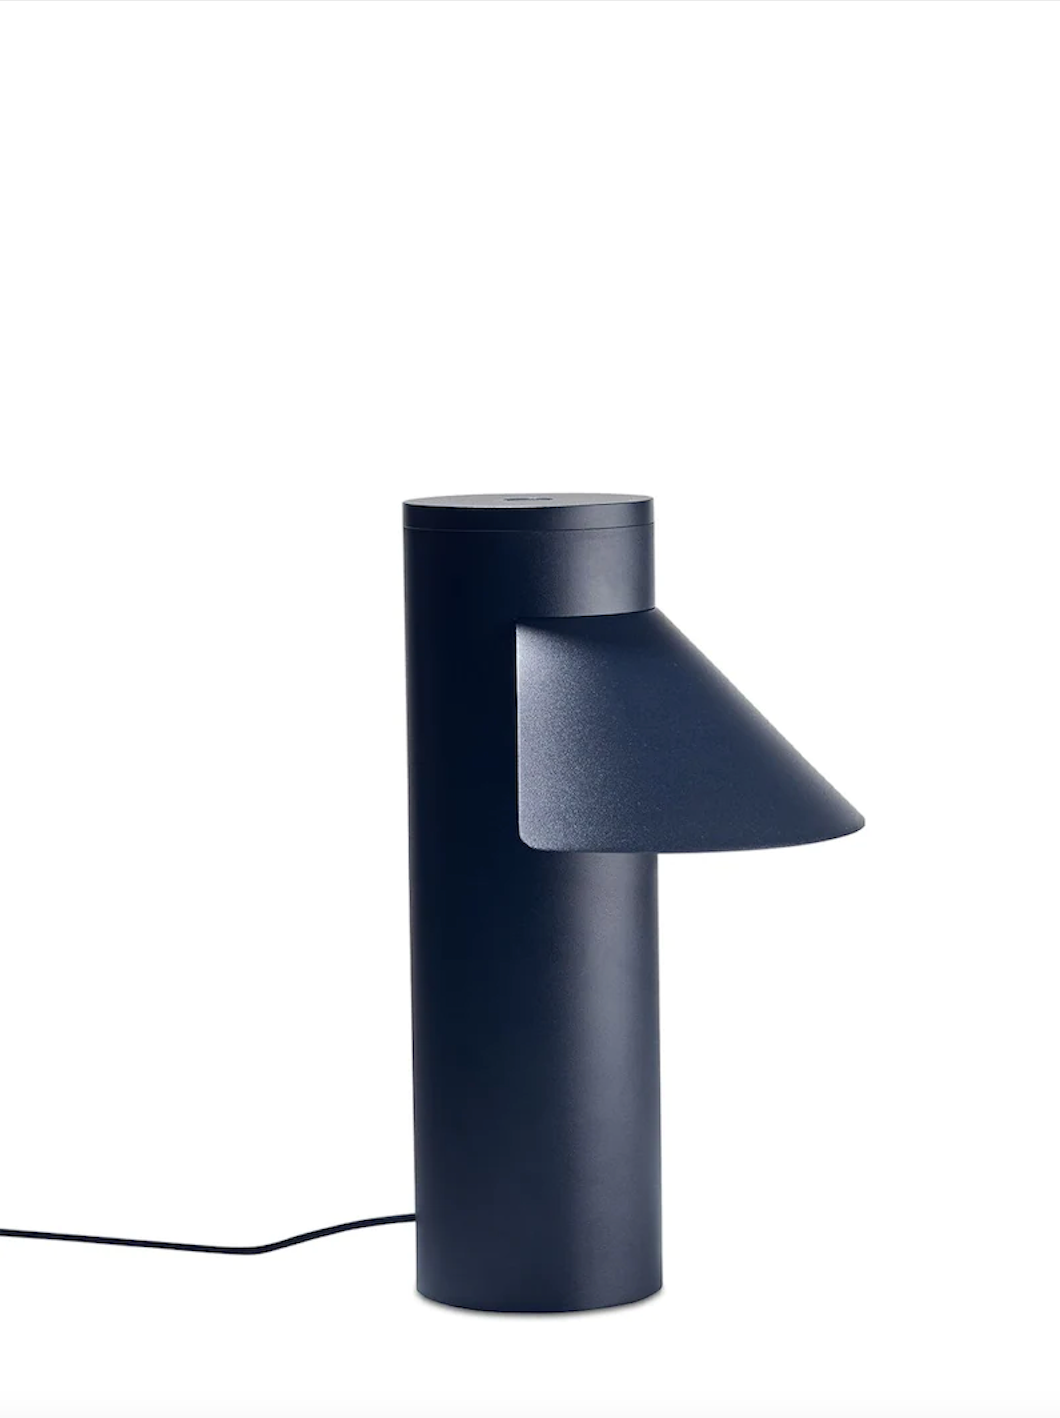 Riscio table lamp